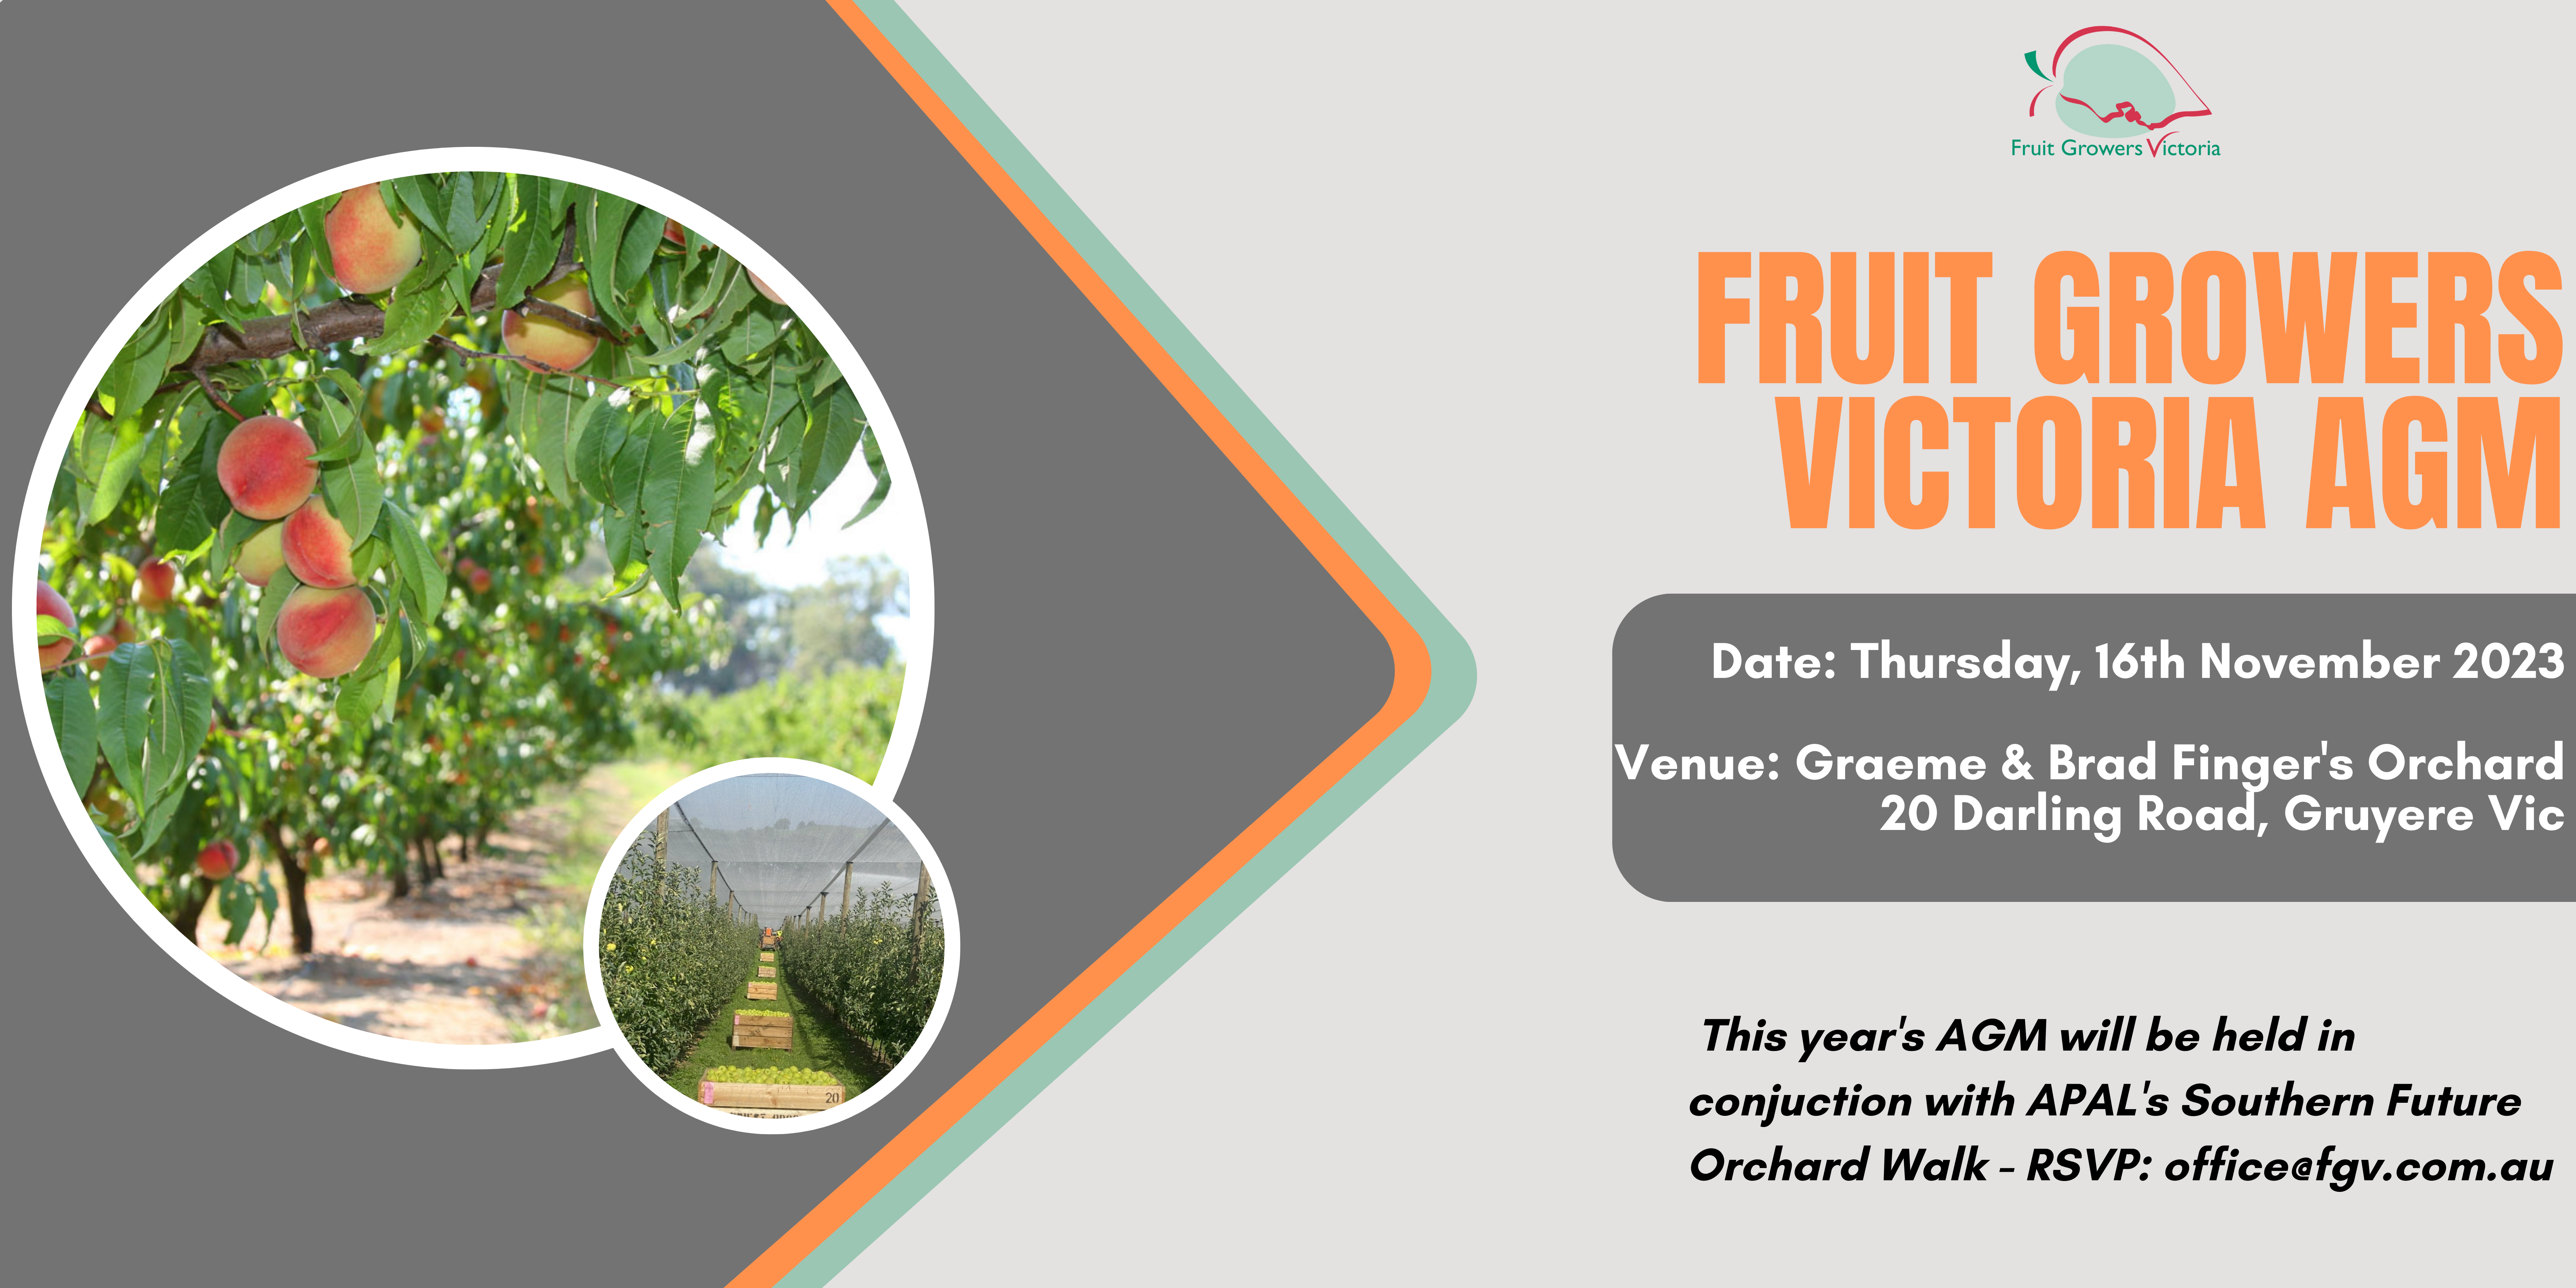 Fruit Growers Victoria AGM: Thursday 16th November 2023 